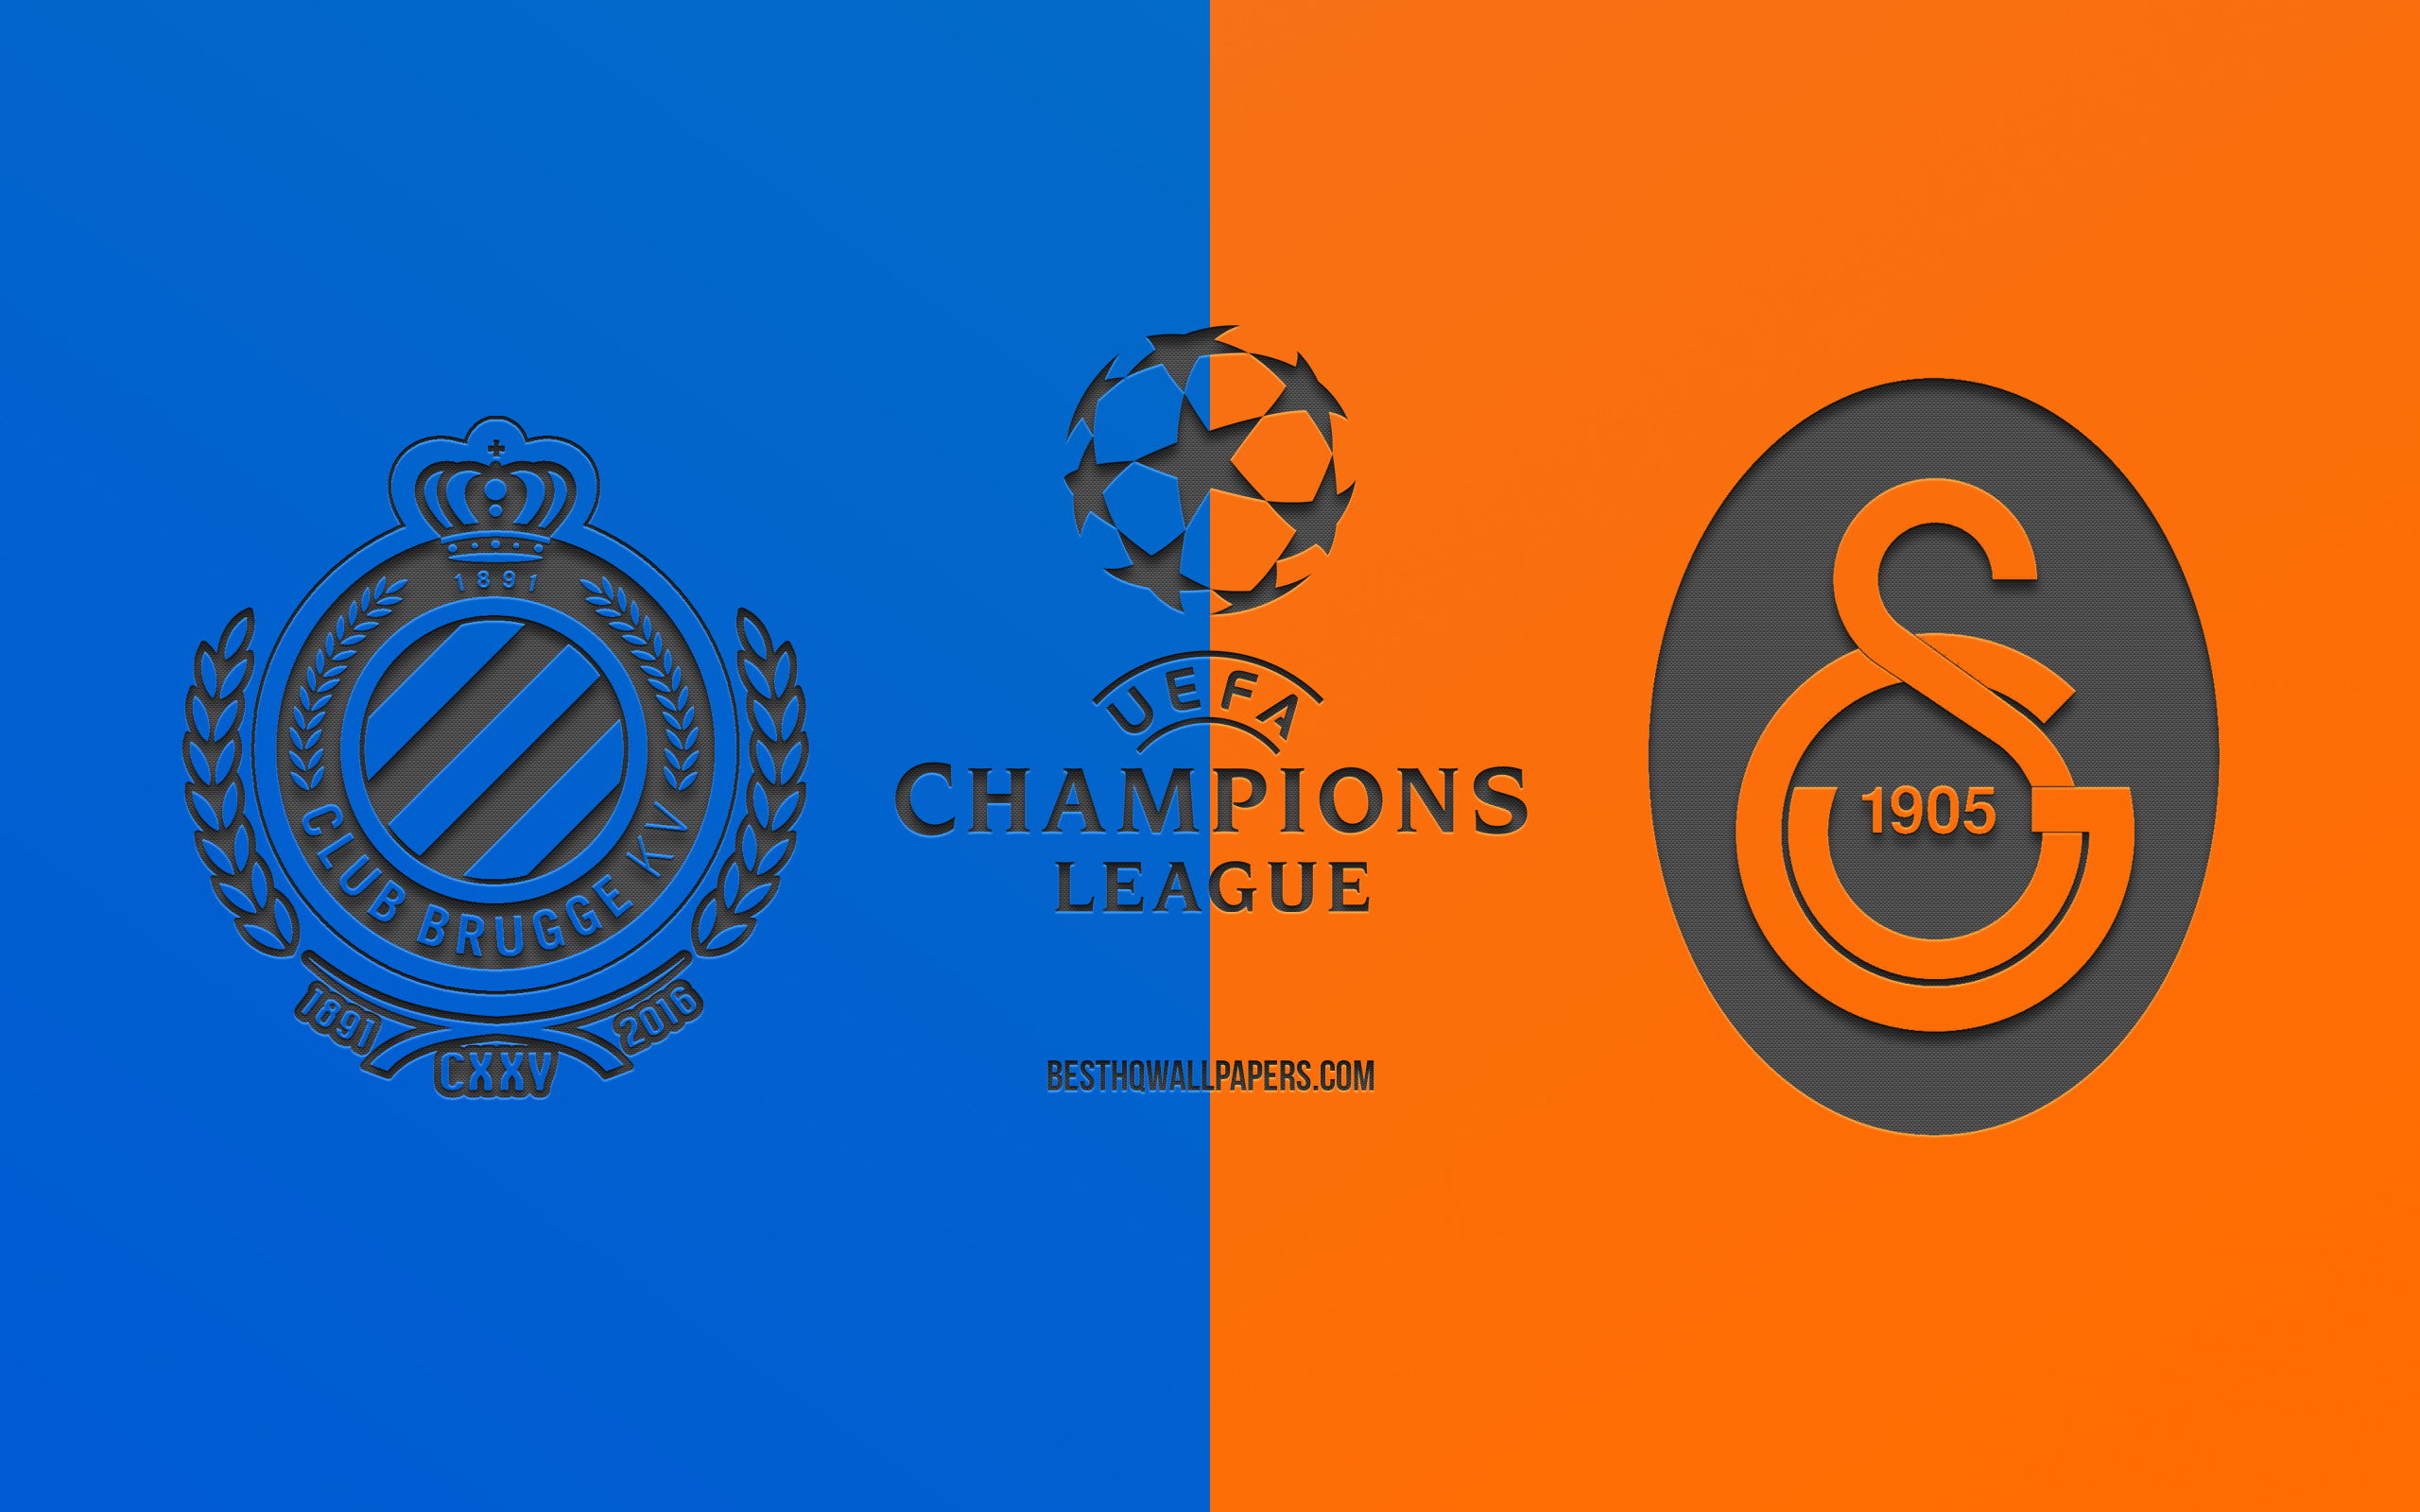 Club Brugge Vs Galatasaray, Football Match, 2019 Champions - Uefa Champions League , HD Wallpaper & Backgrounds